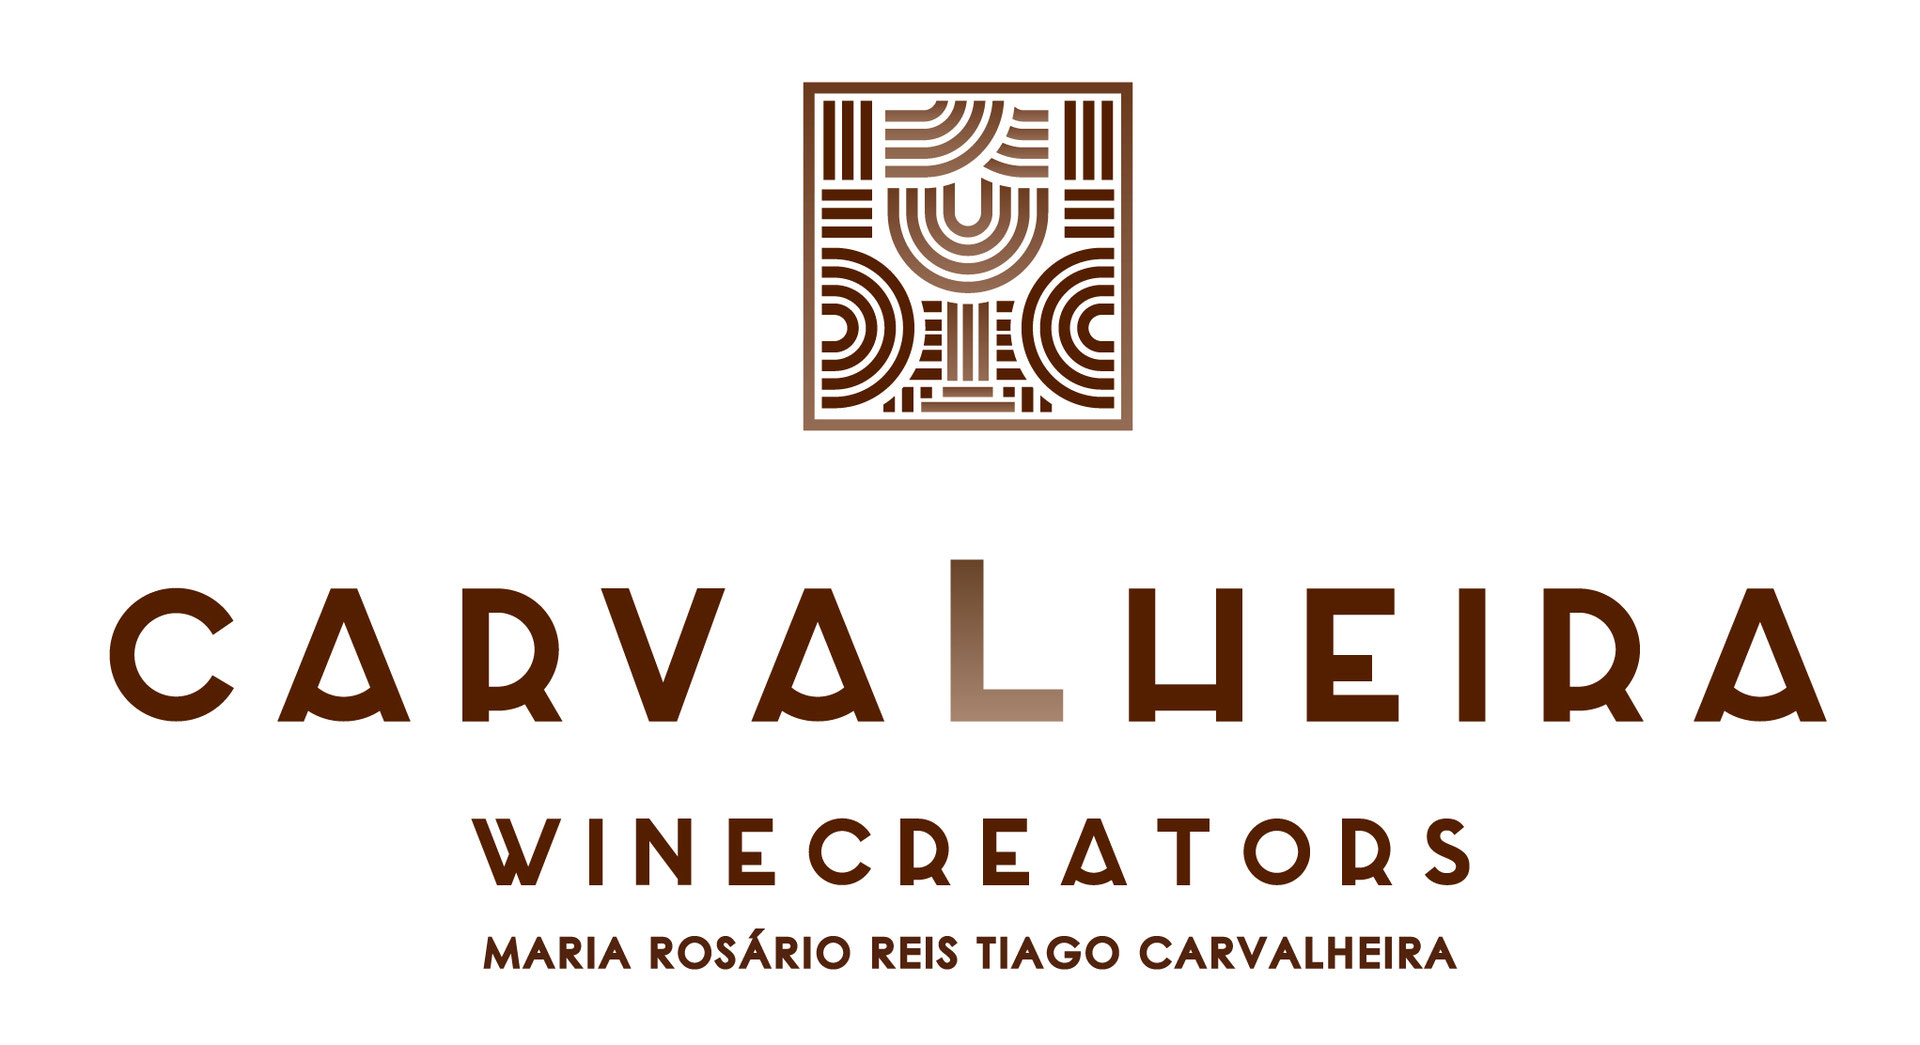 Carvalheira Winecreators